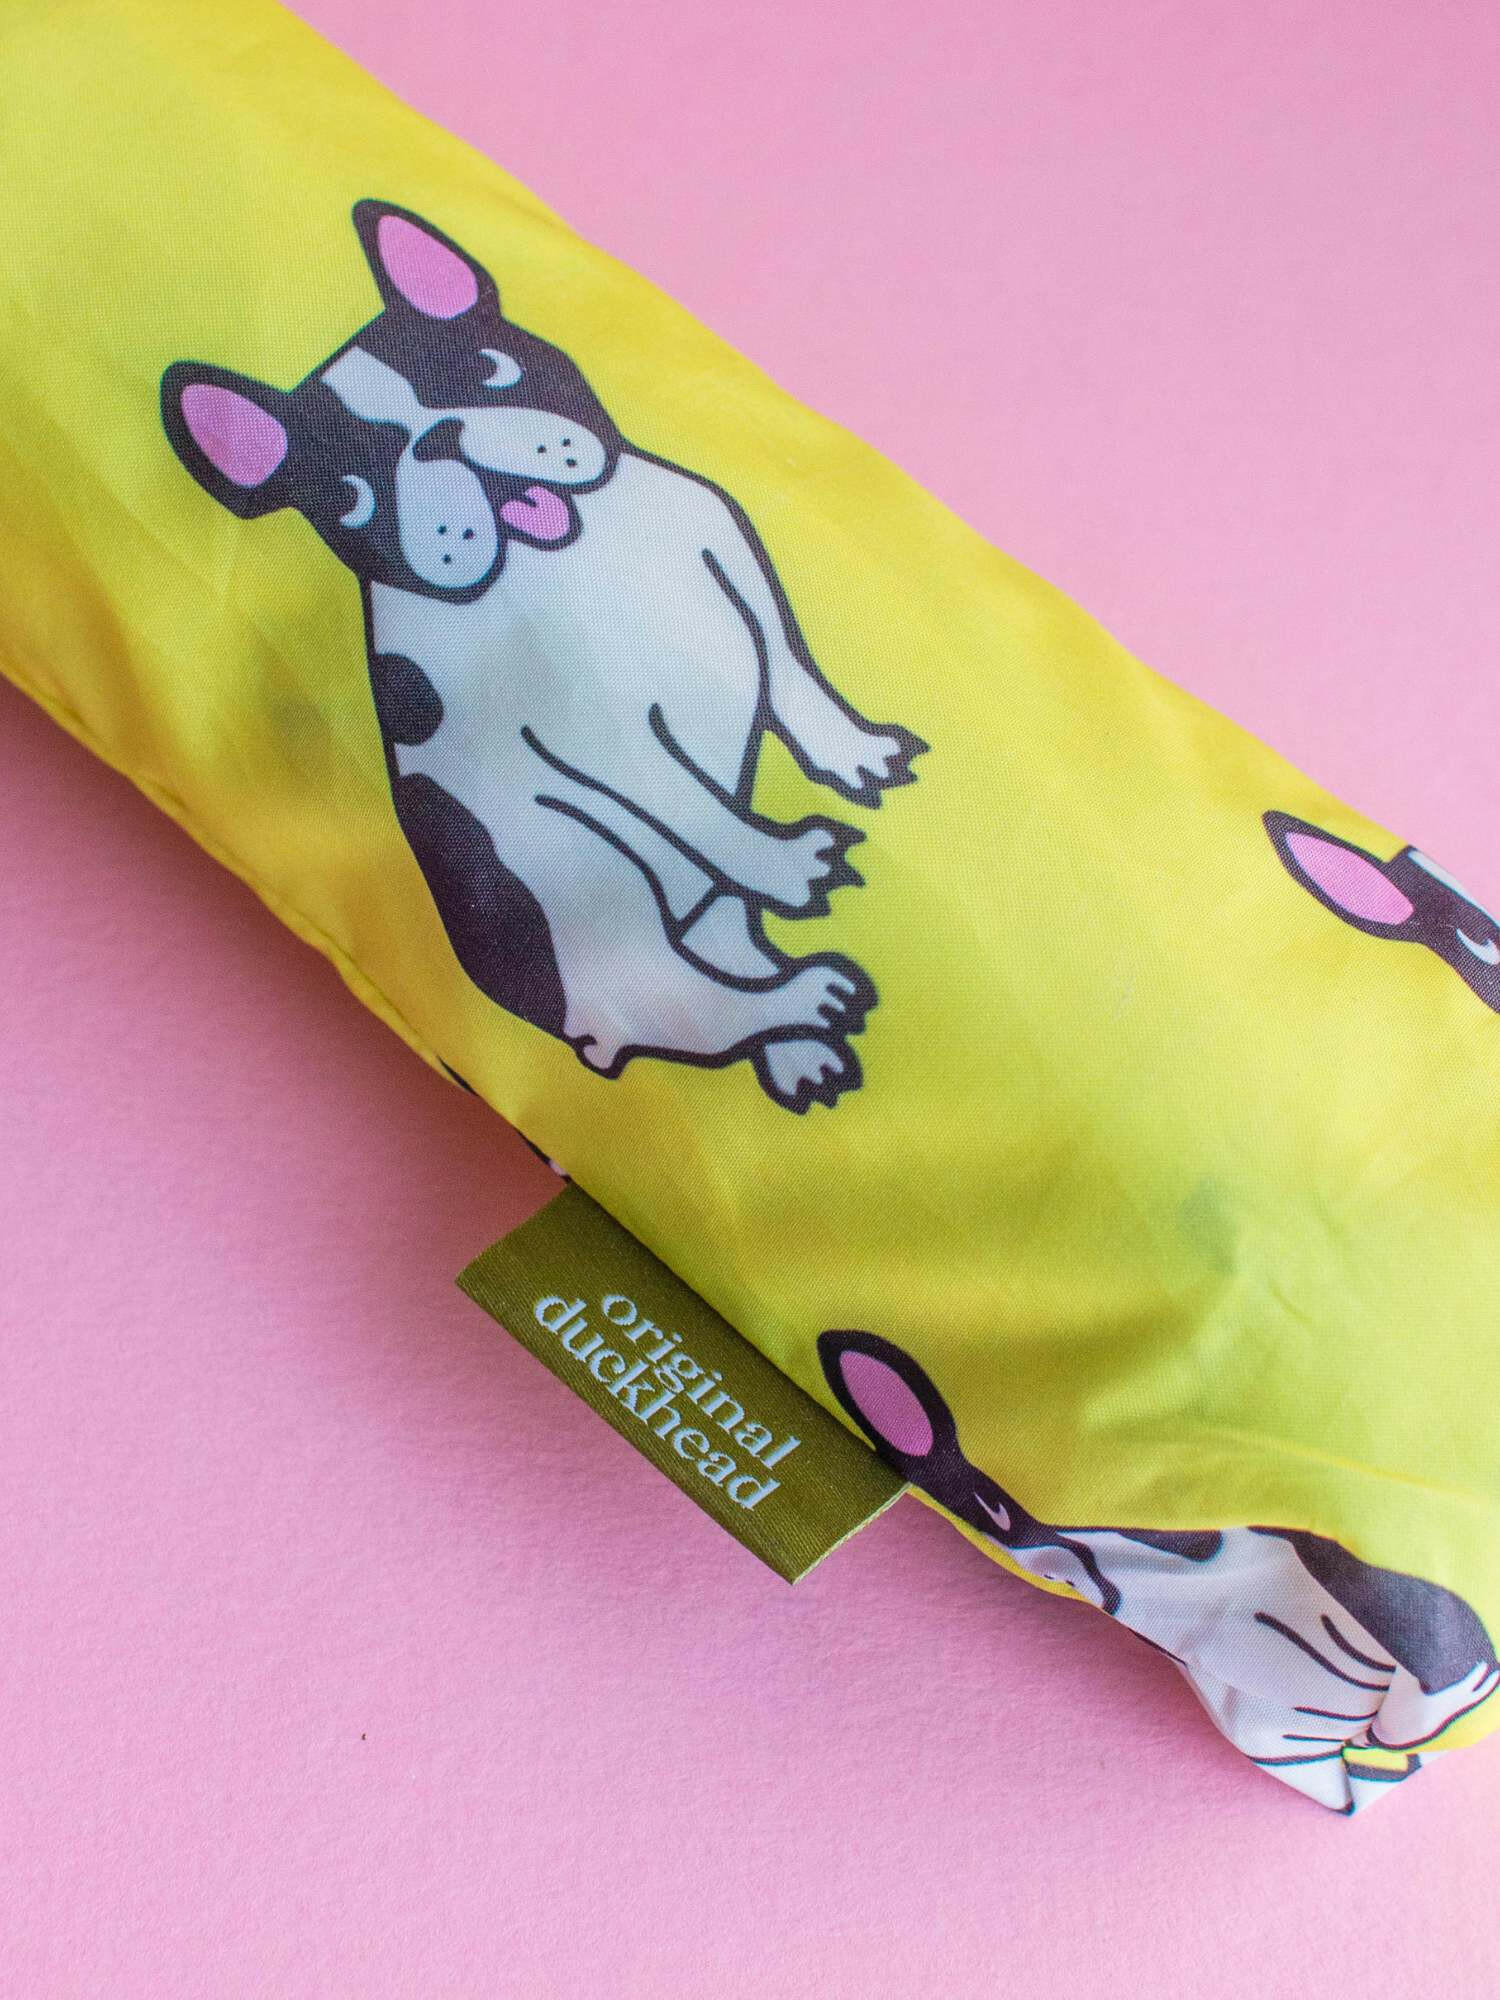 French Bulldog Yellow Eco-friendly Umbrella.